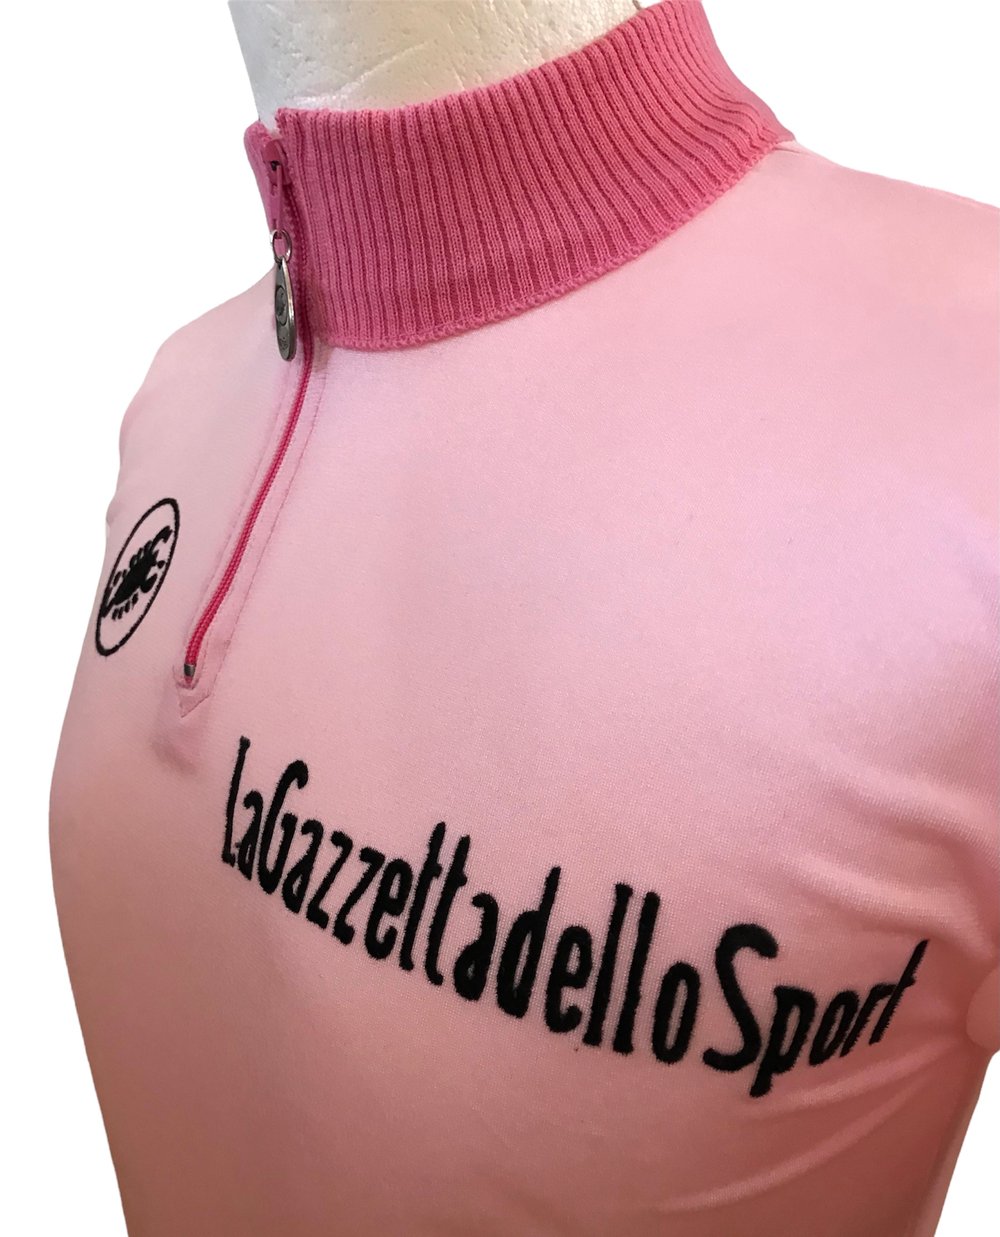 Giuseppe Saronni - 1983 - Giro d’Italia - General Classification - Time Trial 